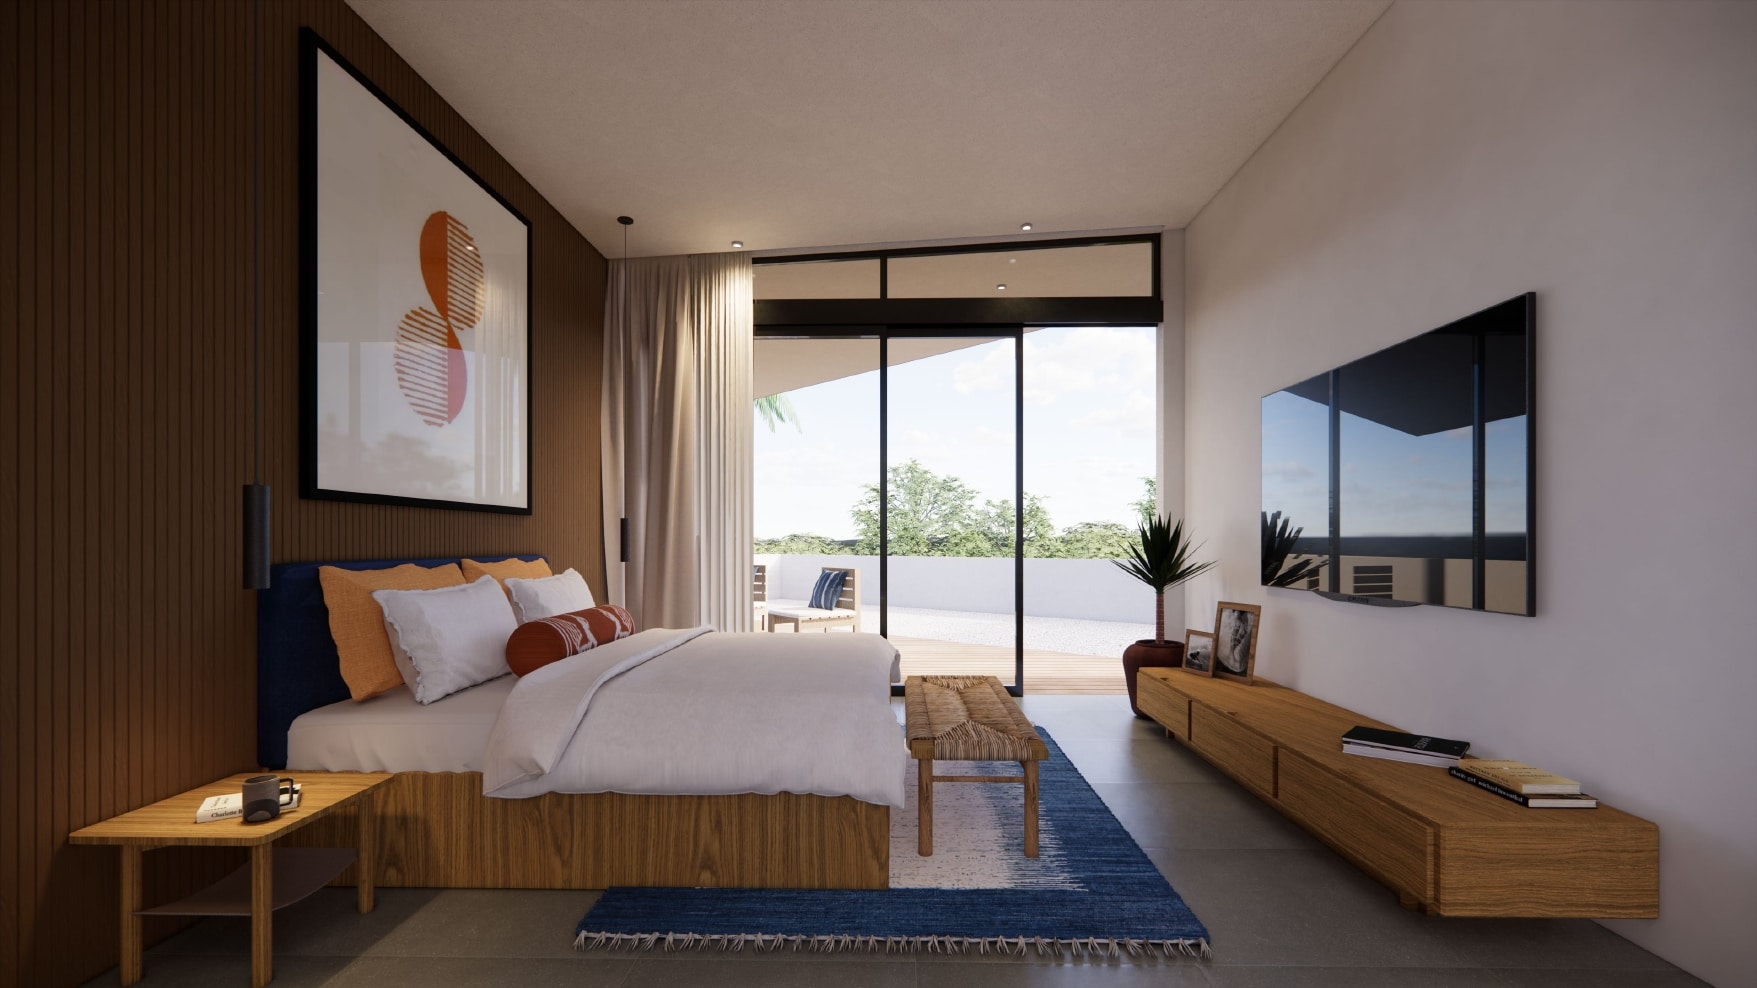 Design Assembly - Anyar 5 Villa - Bali Architect - Interior Design - Bali Villa - Bedroom - Terrace - Wooden Facade